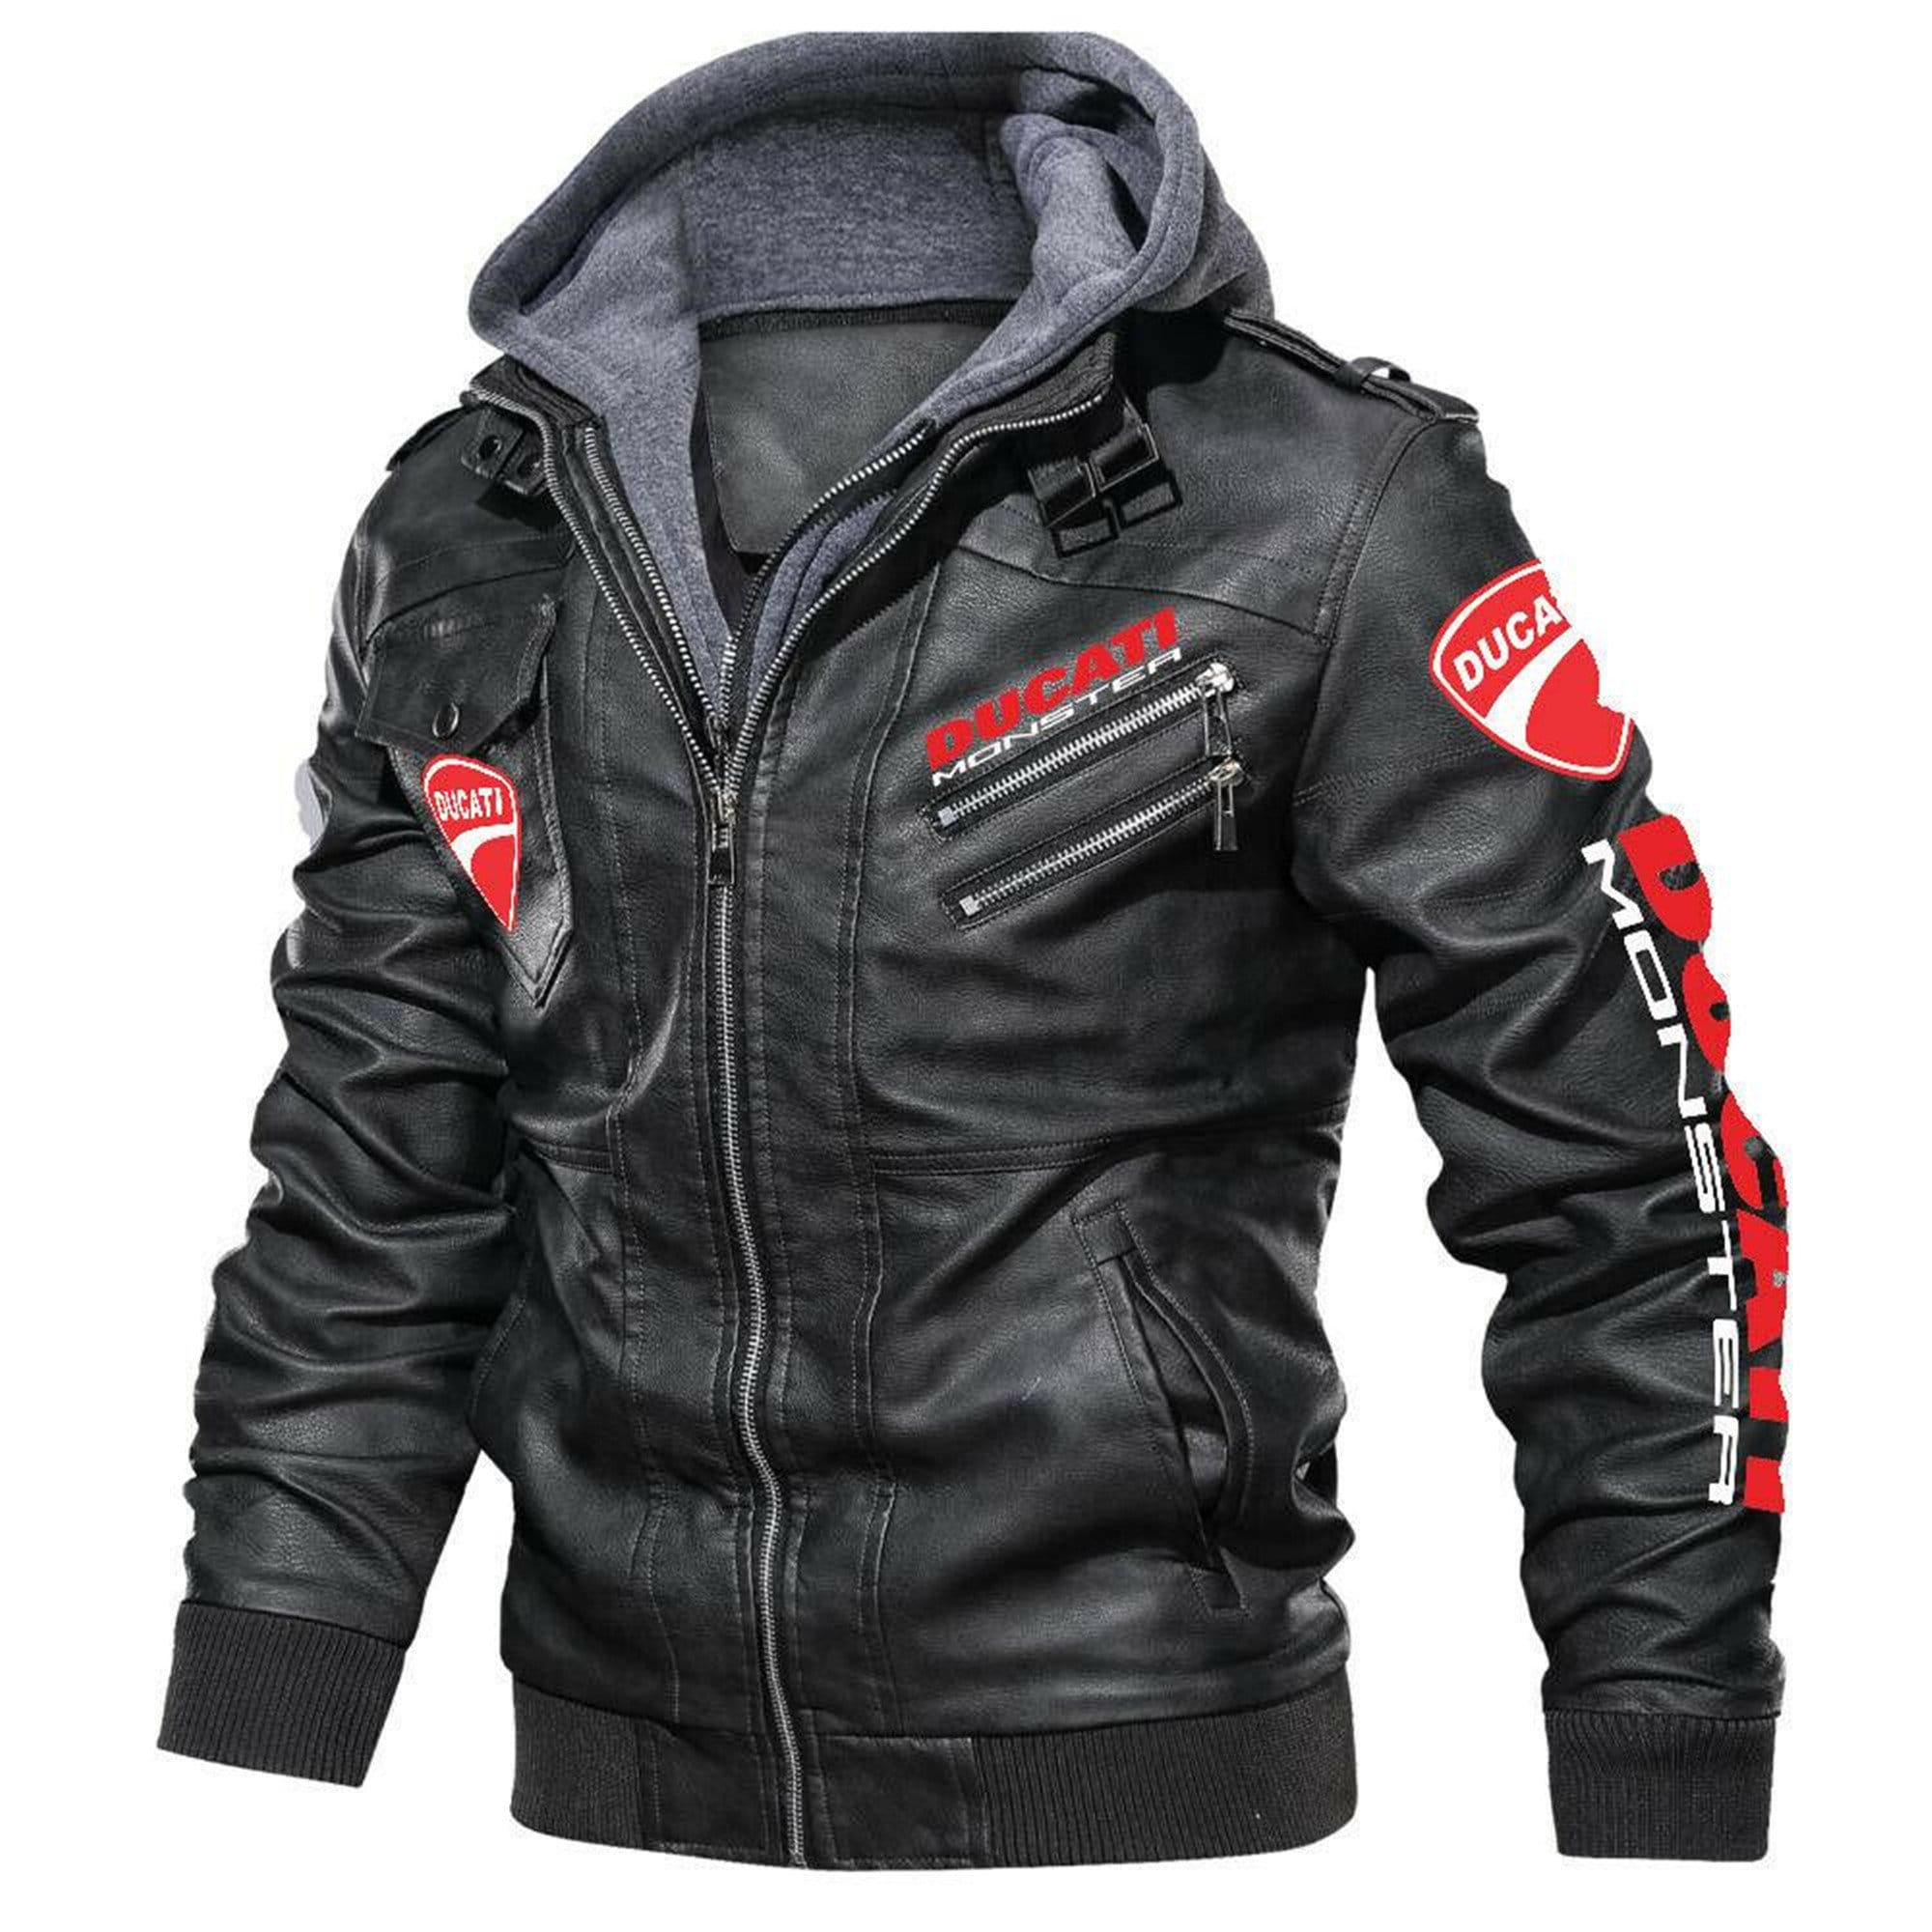 DUCATI MONSTER-Leather Jacket Best giftNew jacket | Etsy